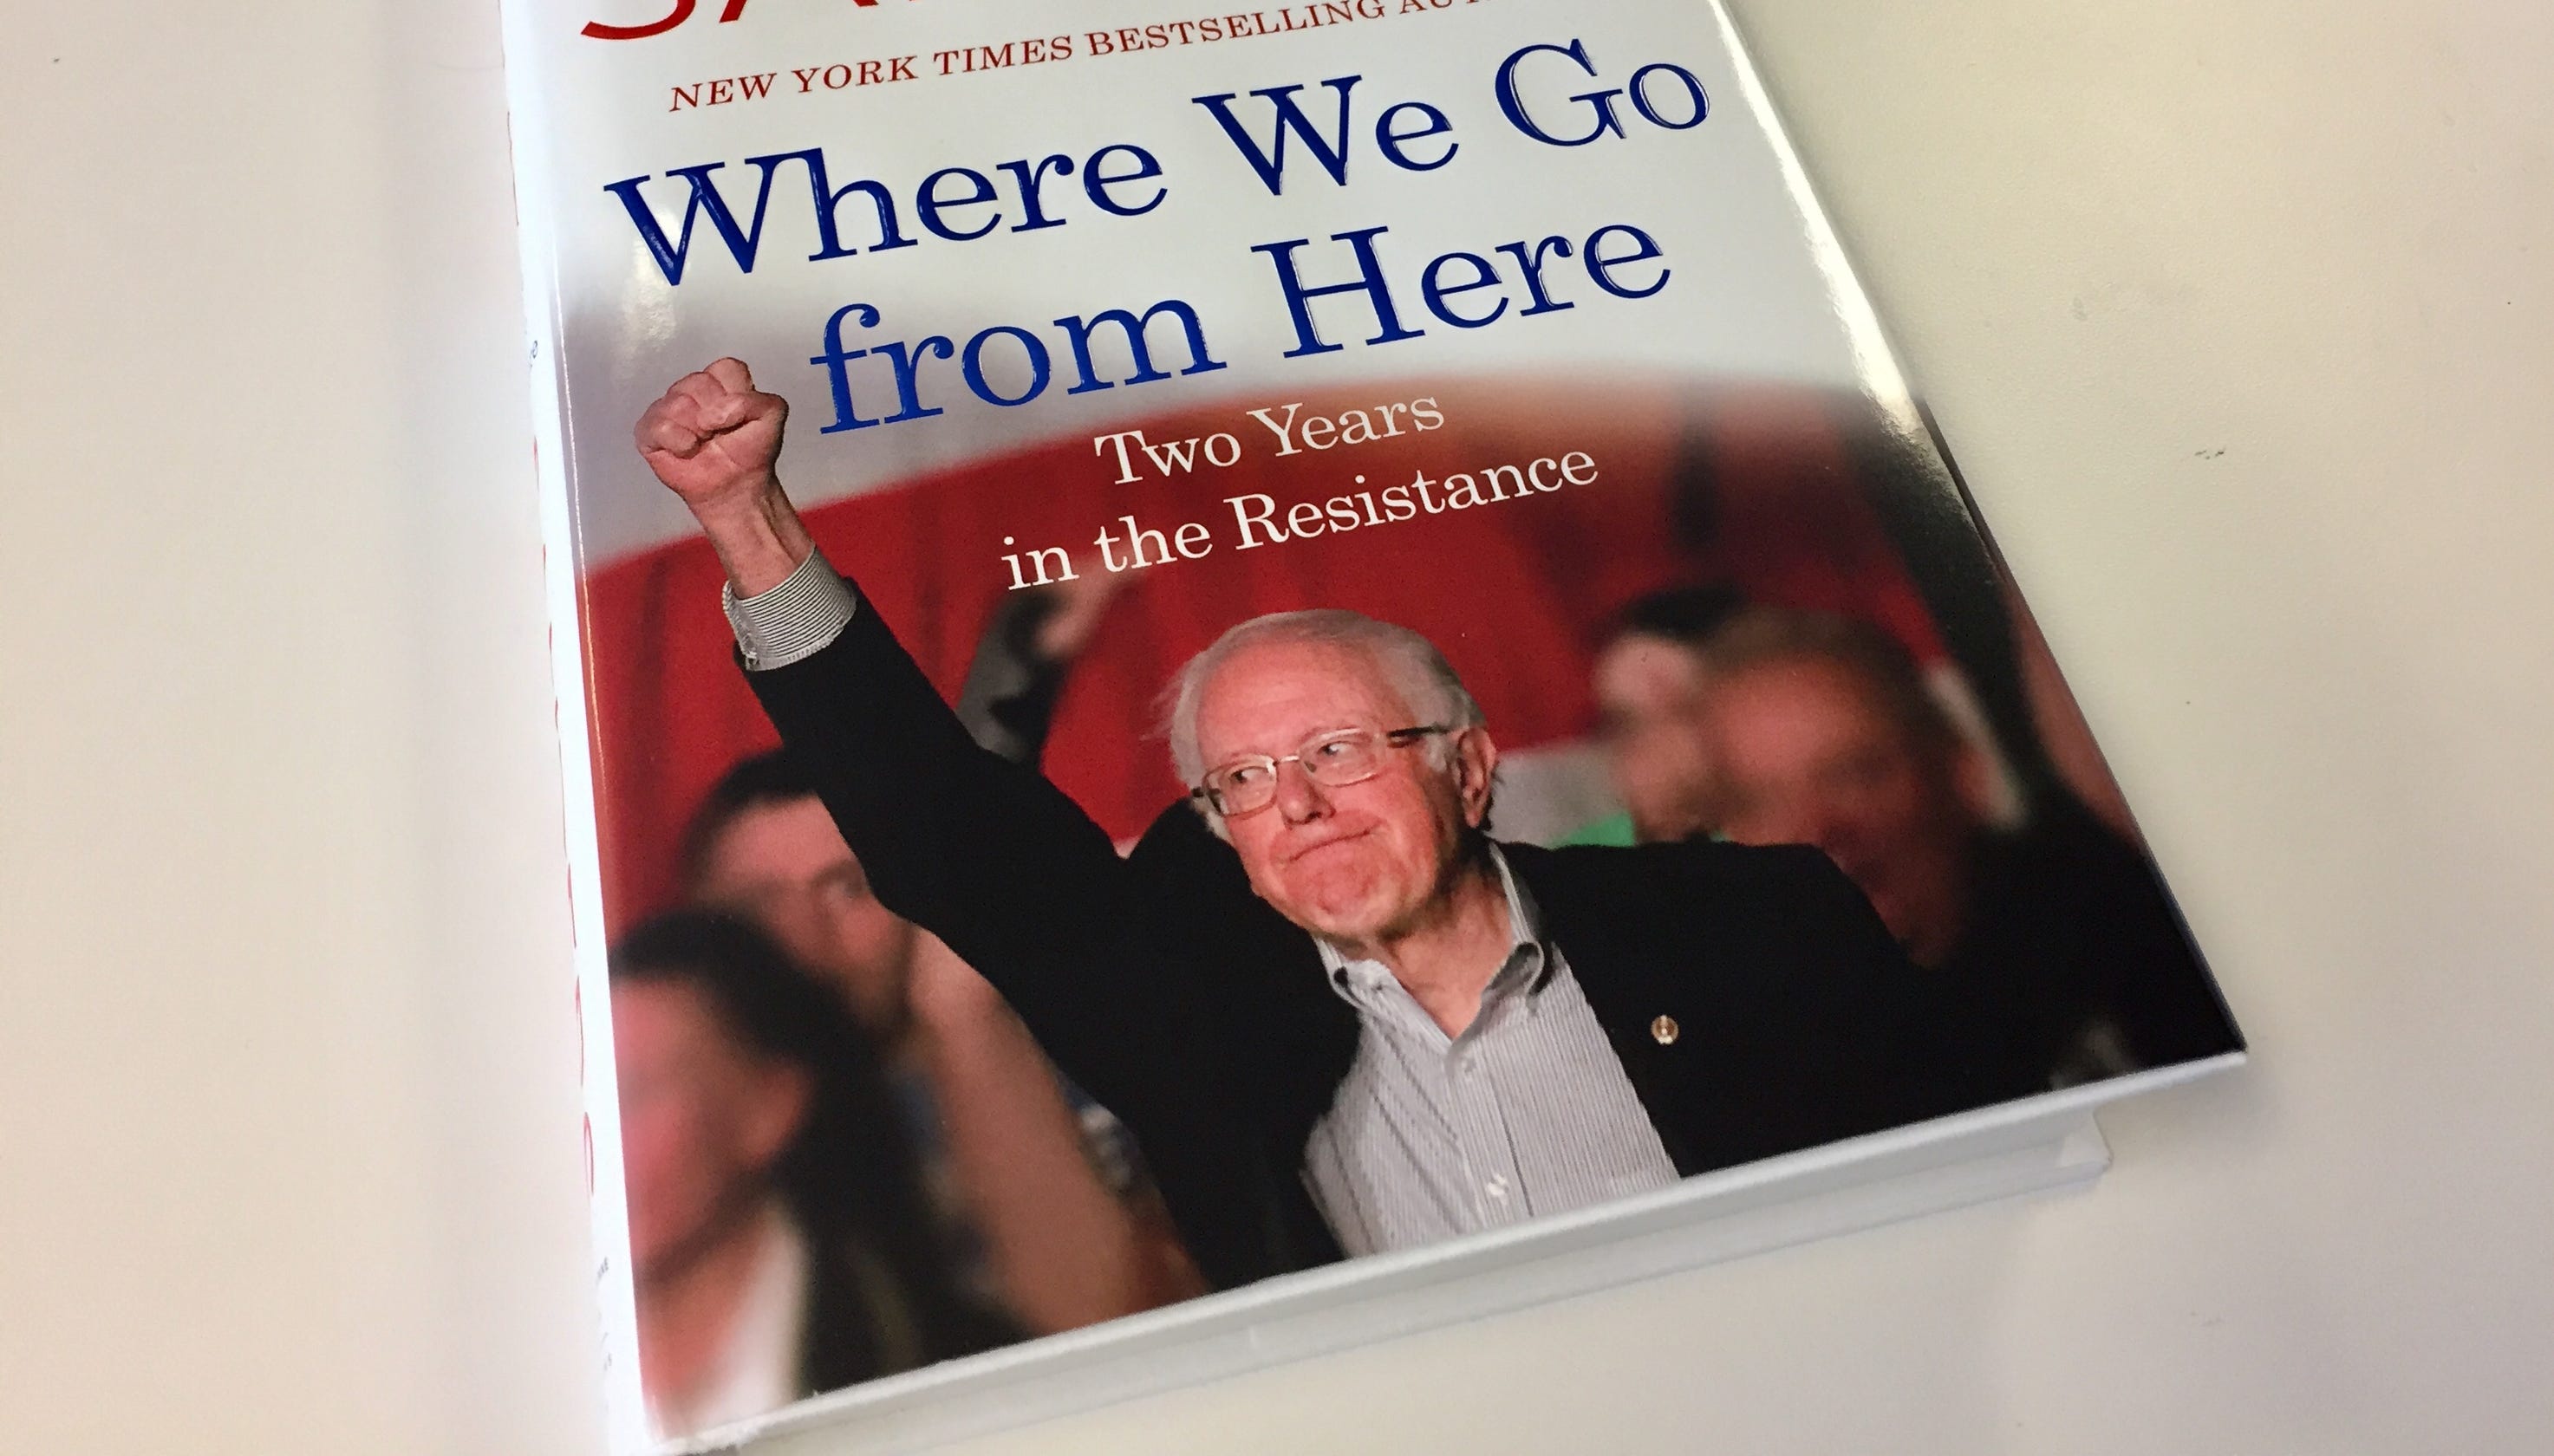 Bernie Sanders' book promotion backfires in Reddit AMA